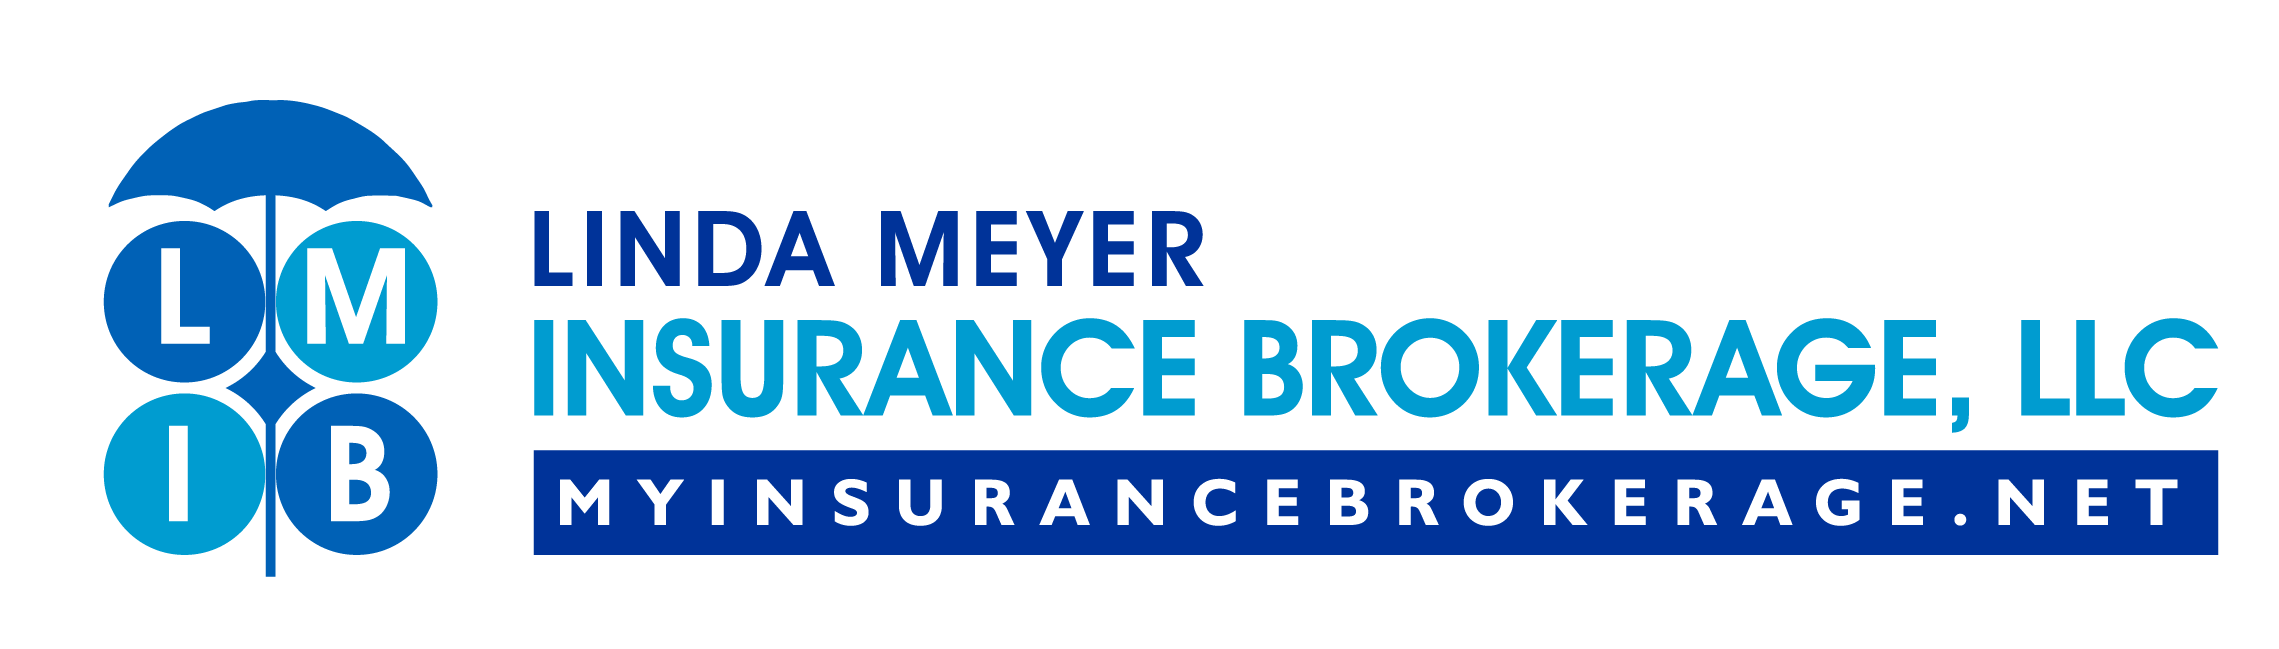 Linda Meyer Insurance Brokerage LLC